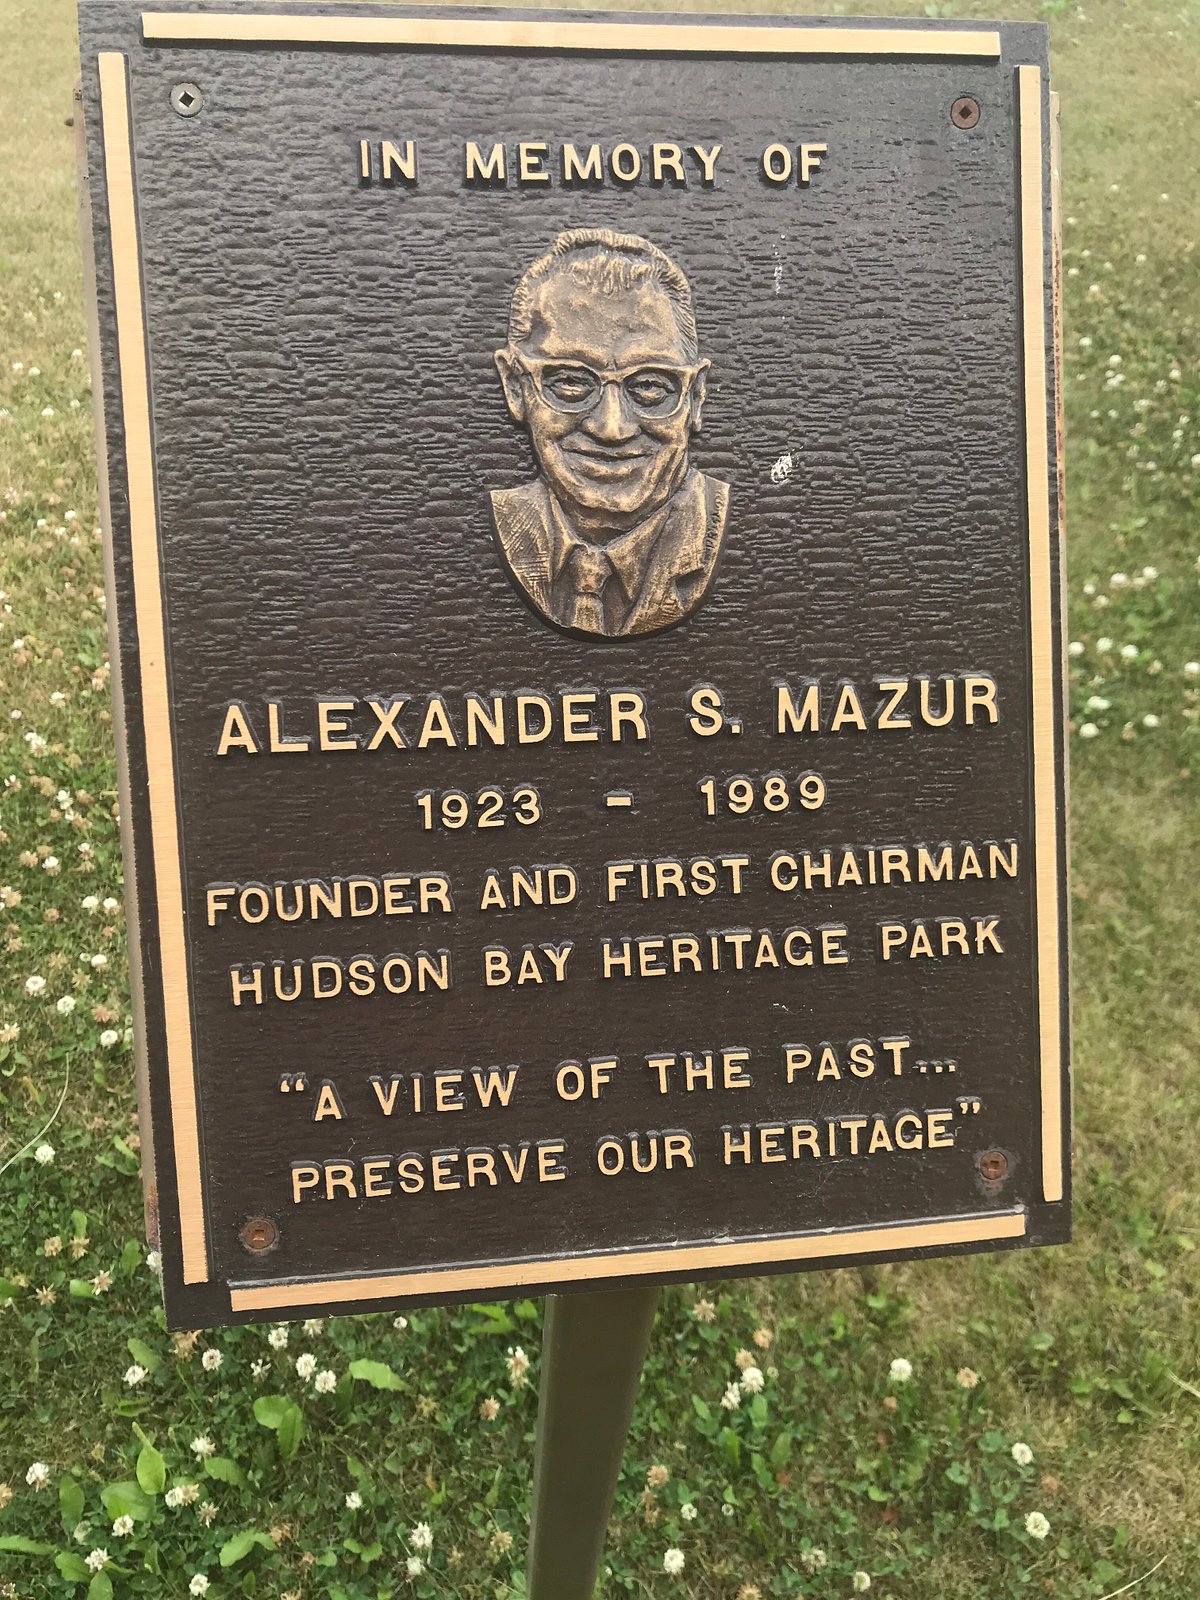 Al Mazur Memorial Heritage Park (Hudson Bay, Saskatchewan): Hours, Address,  Free Attraction Review - Tripadvisor